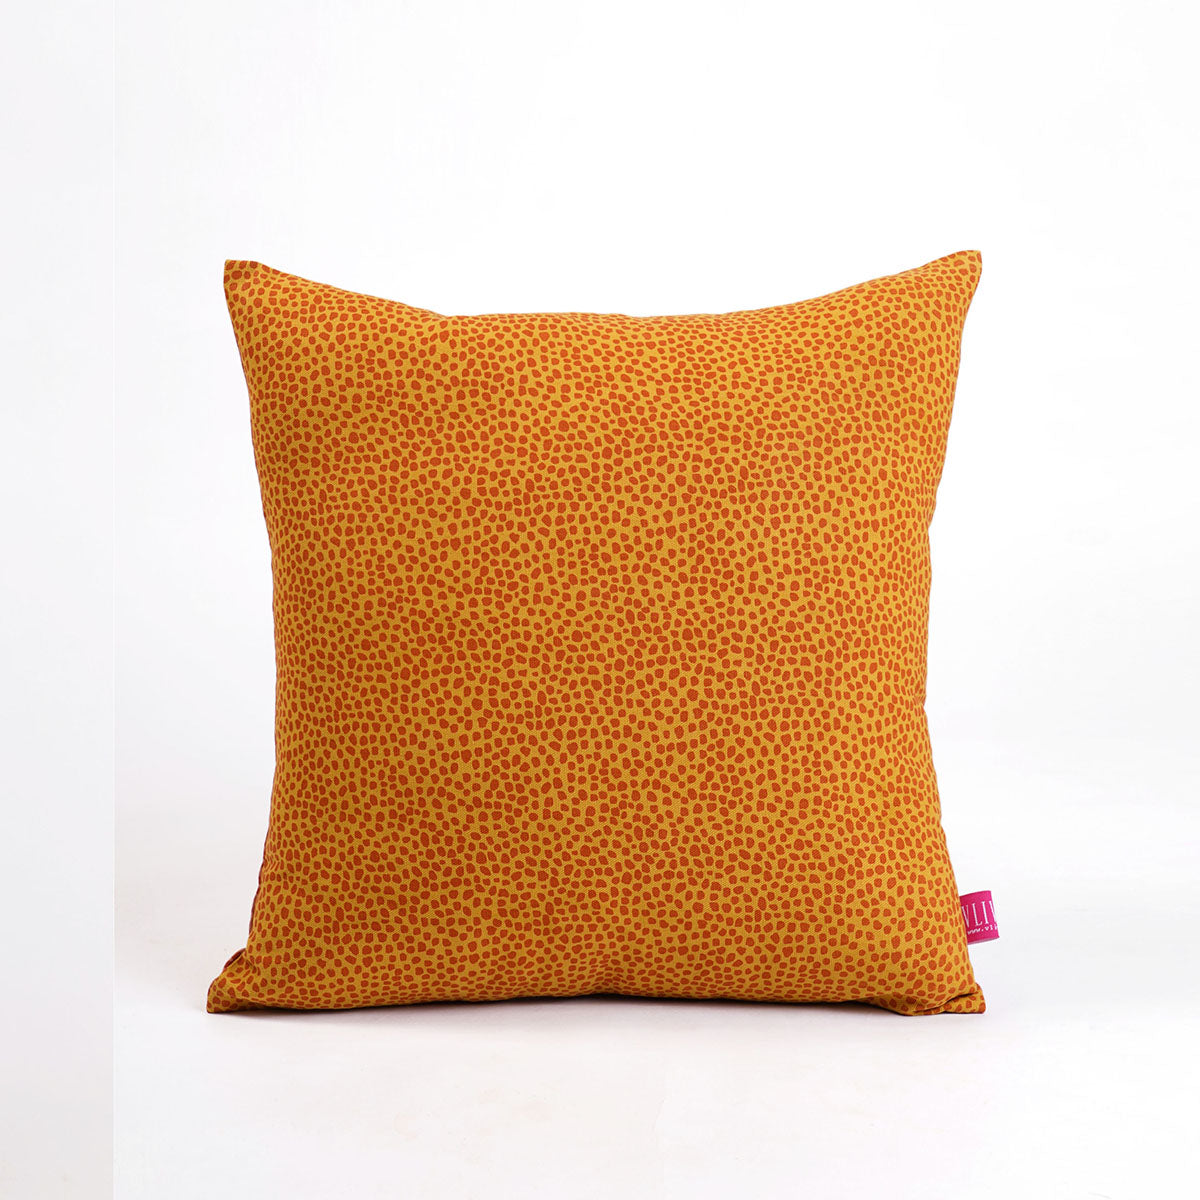 MODERN RETRO - Mustard Yellow &amp; Terracotta reversible throw pillow cover, dot print, sizes available.